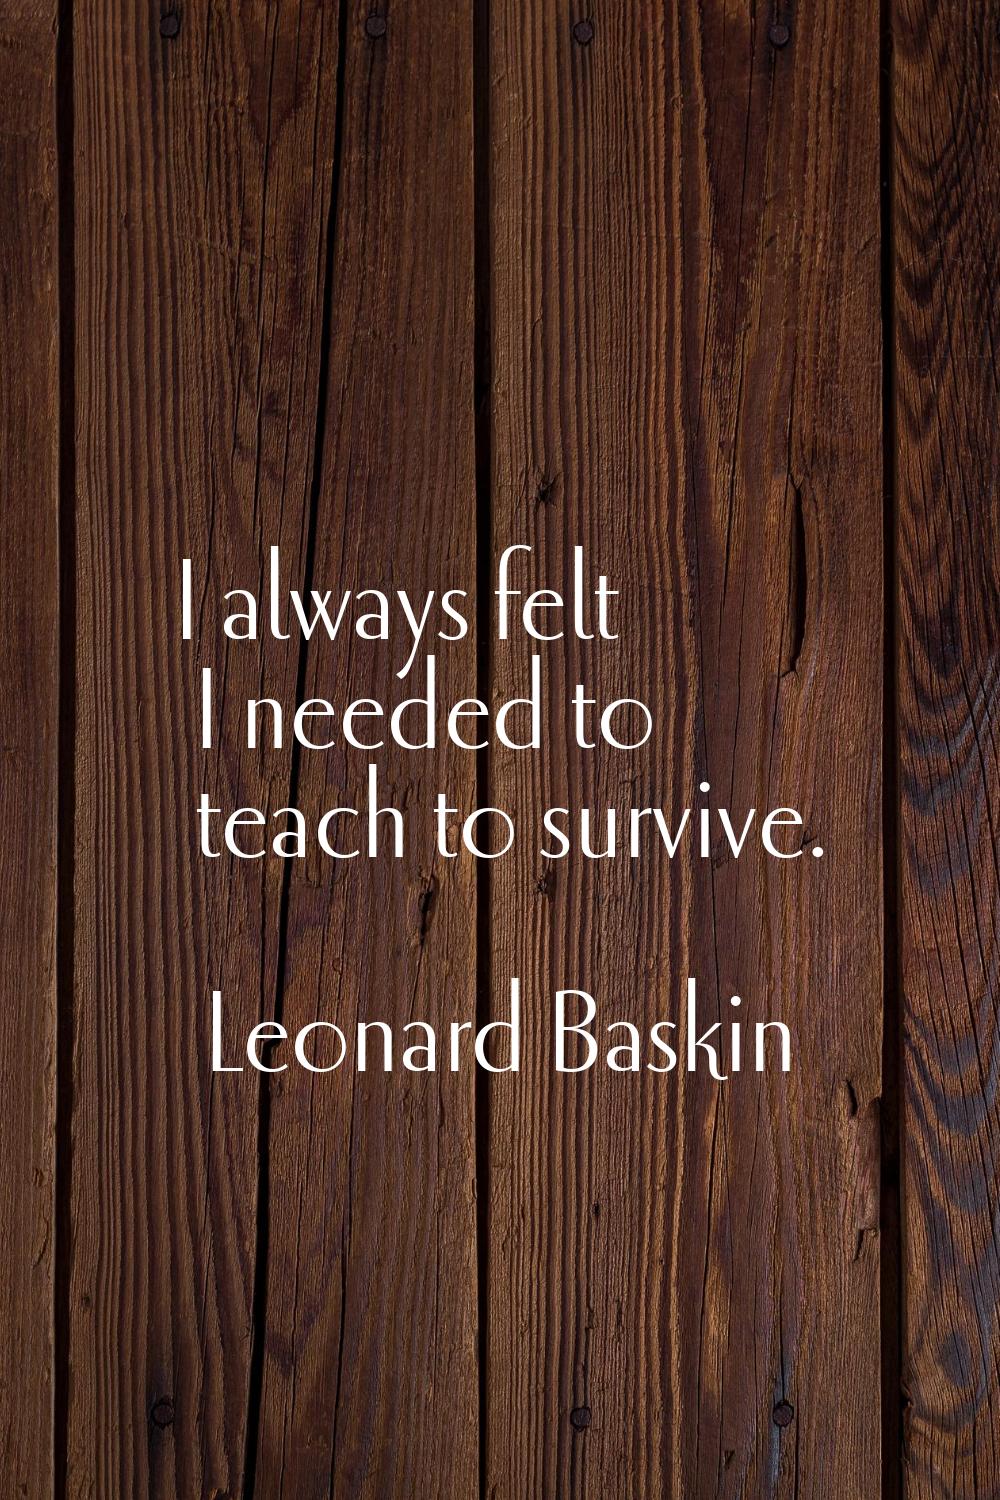 I always felt I needed to teach to survive.